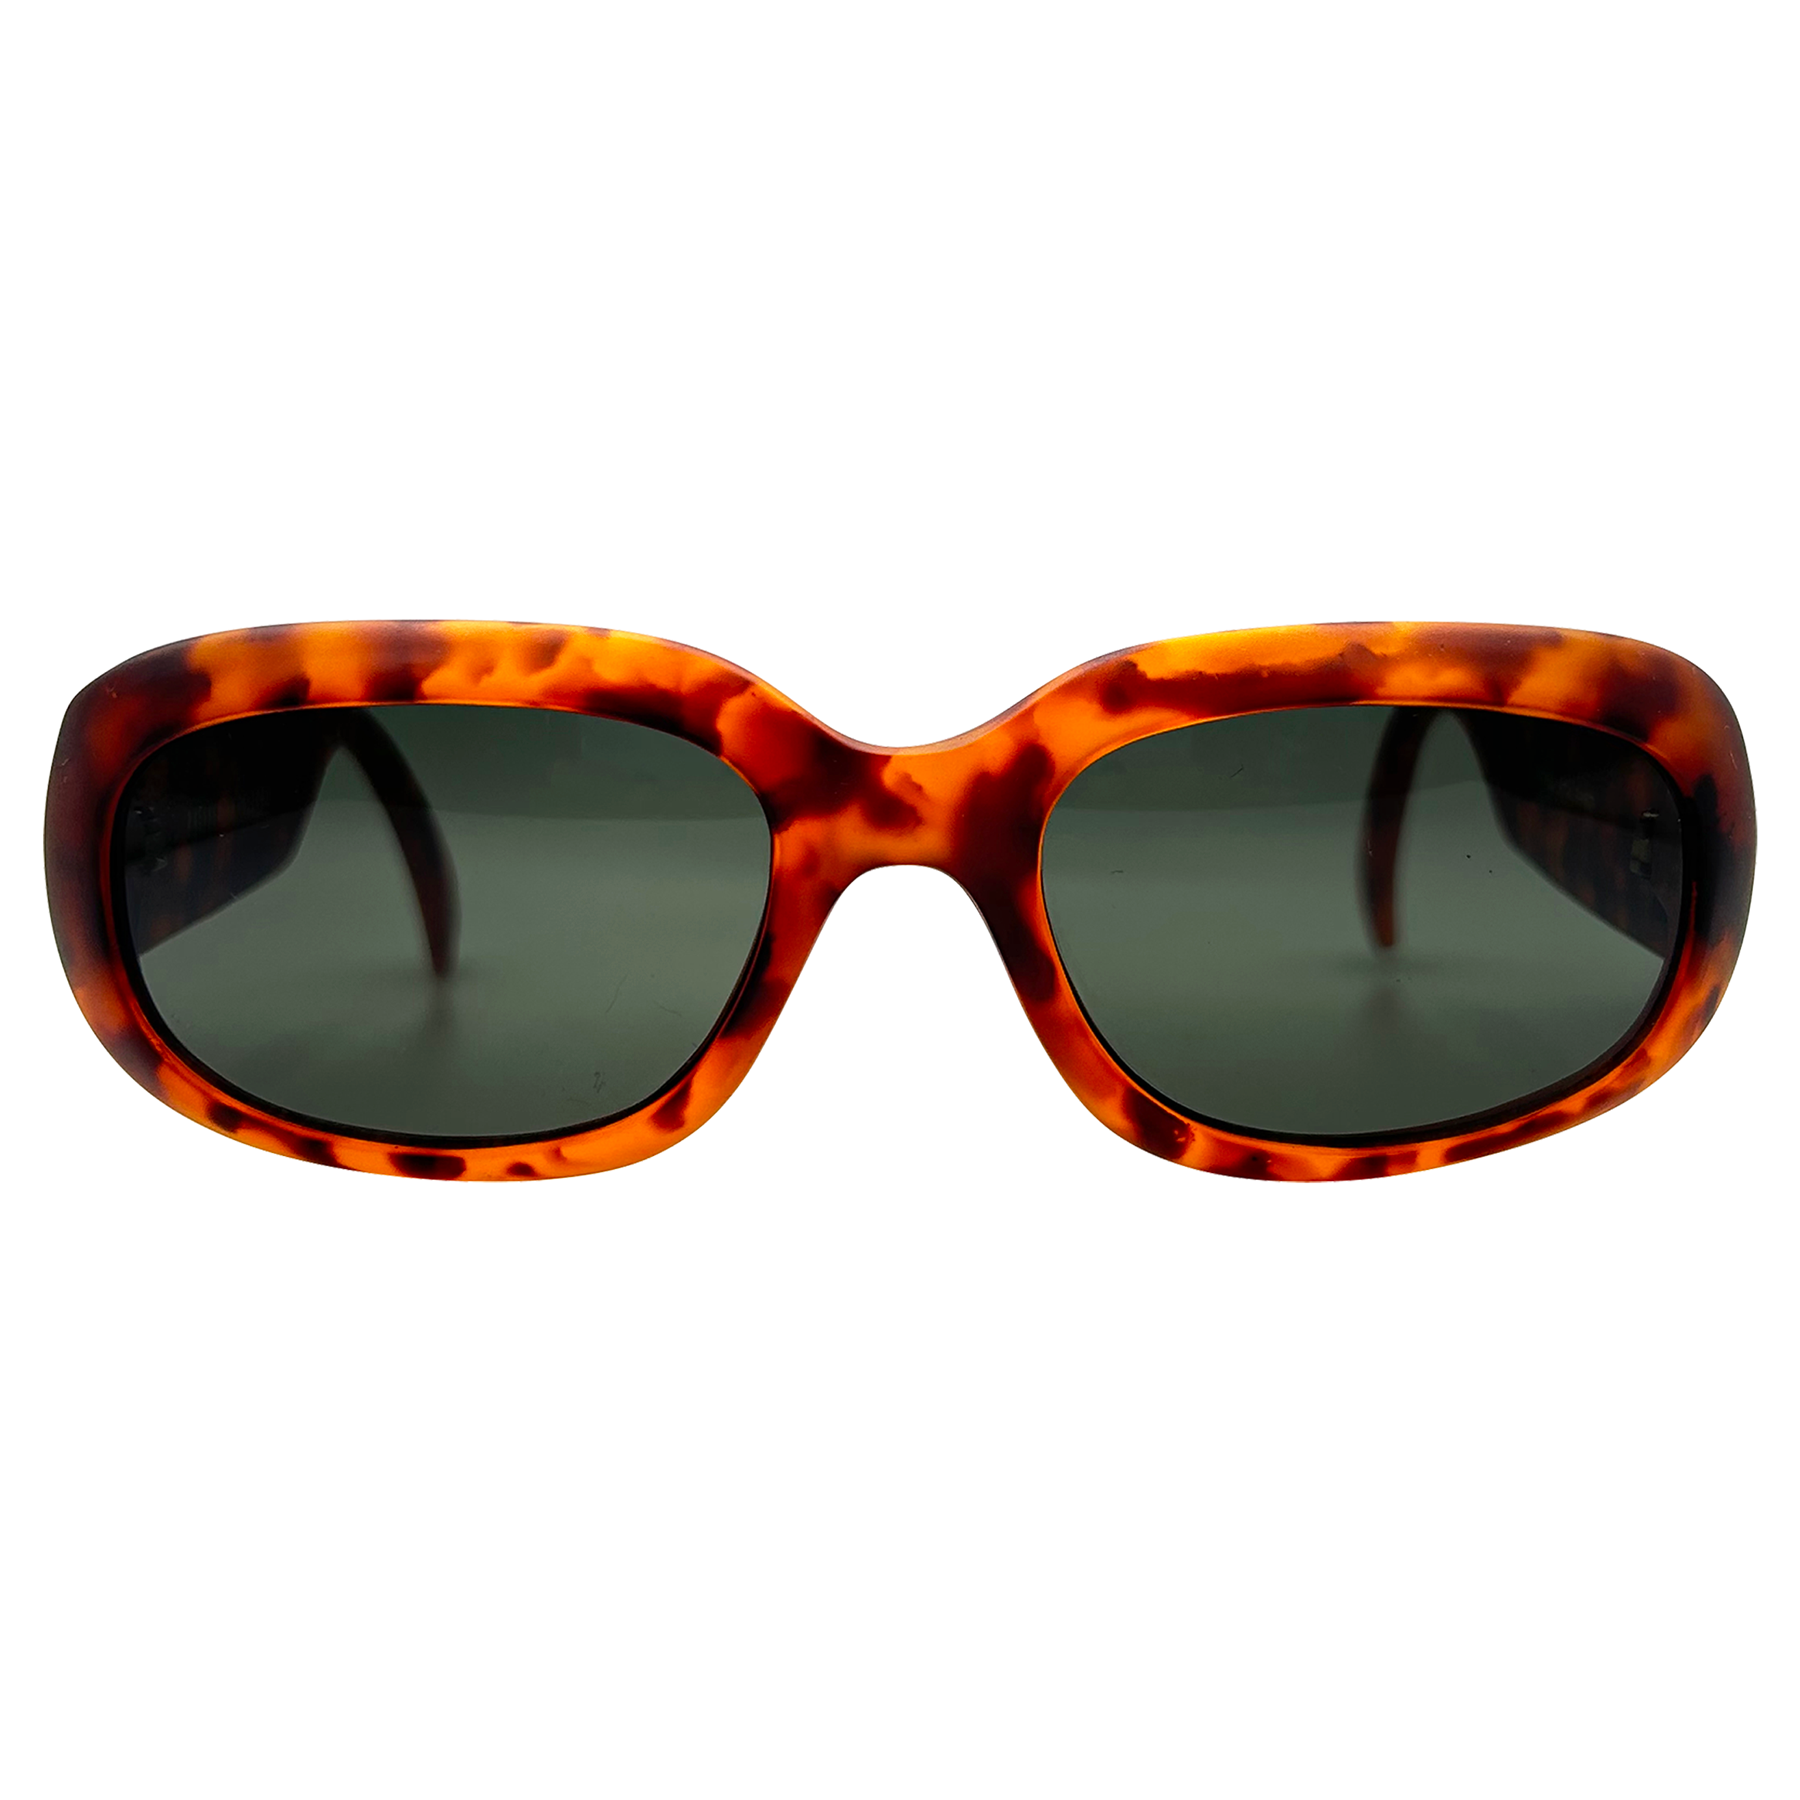 RAVE-UP Matte Tortoise/G15 Mod Square Sunglasses